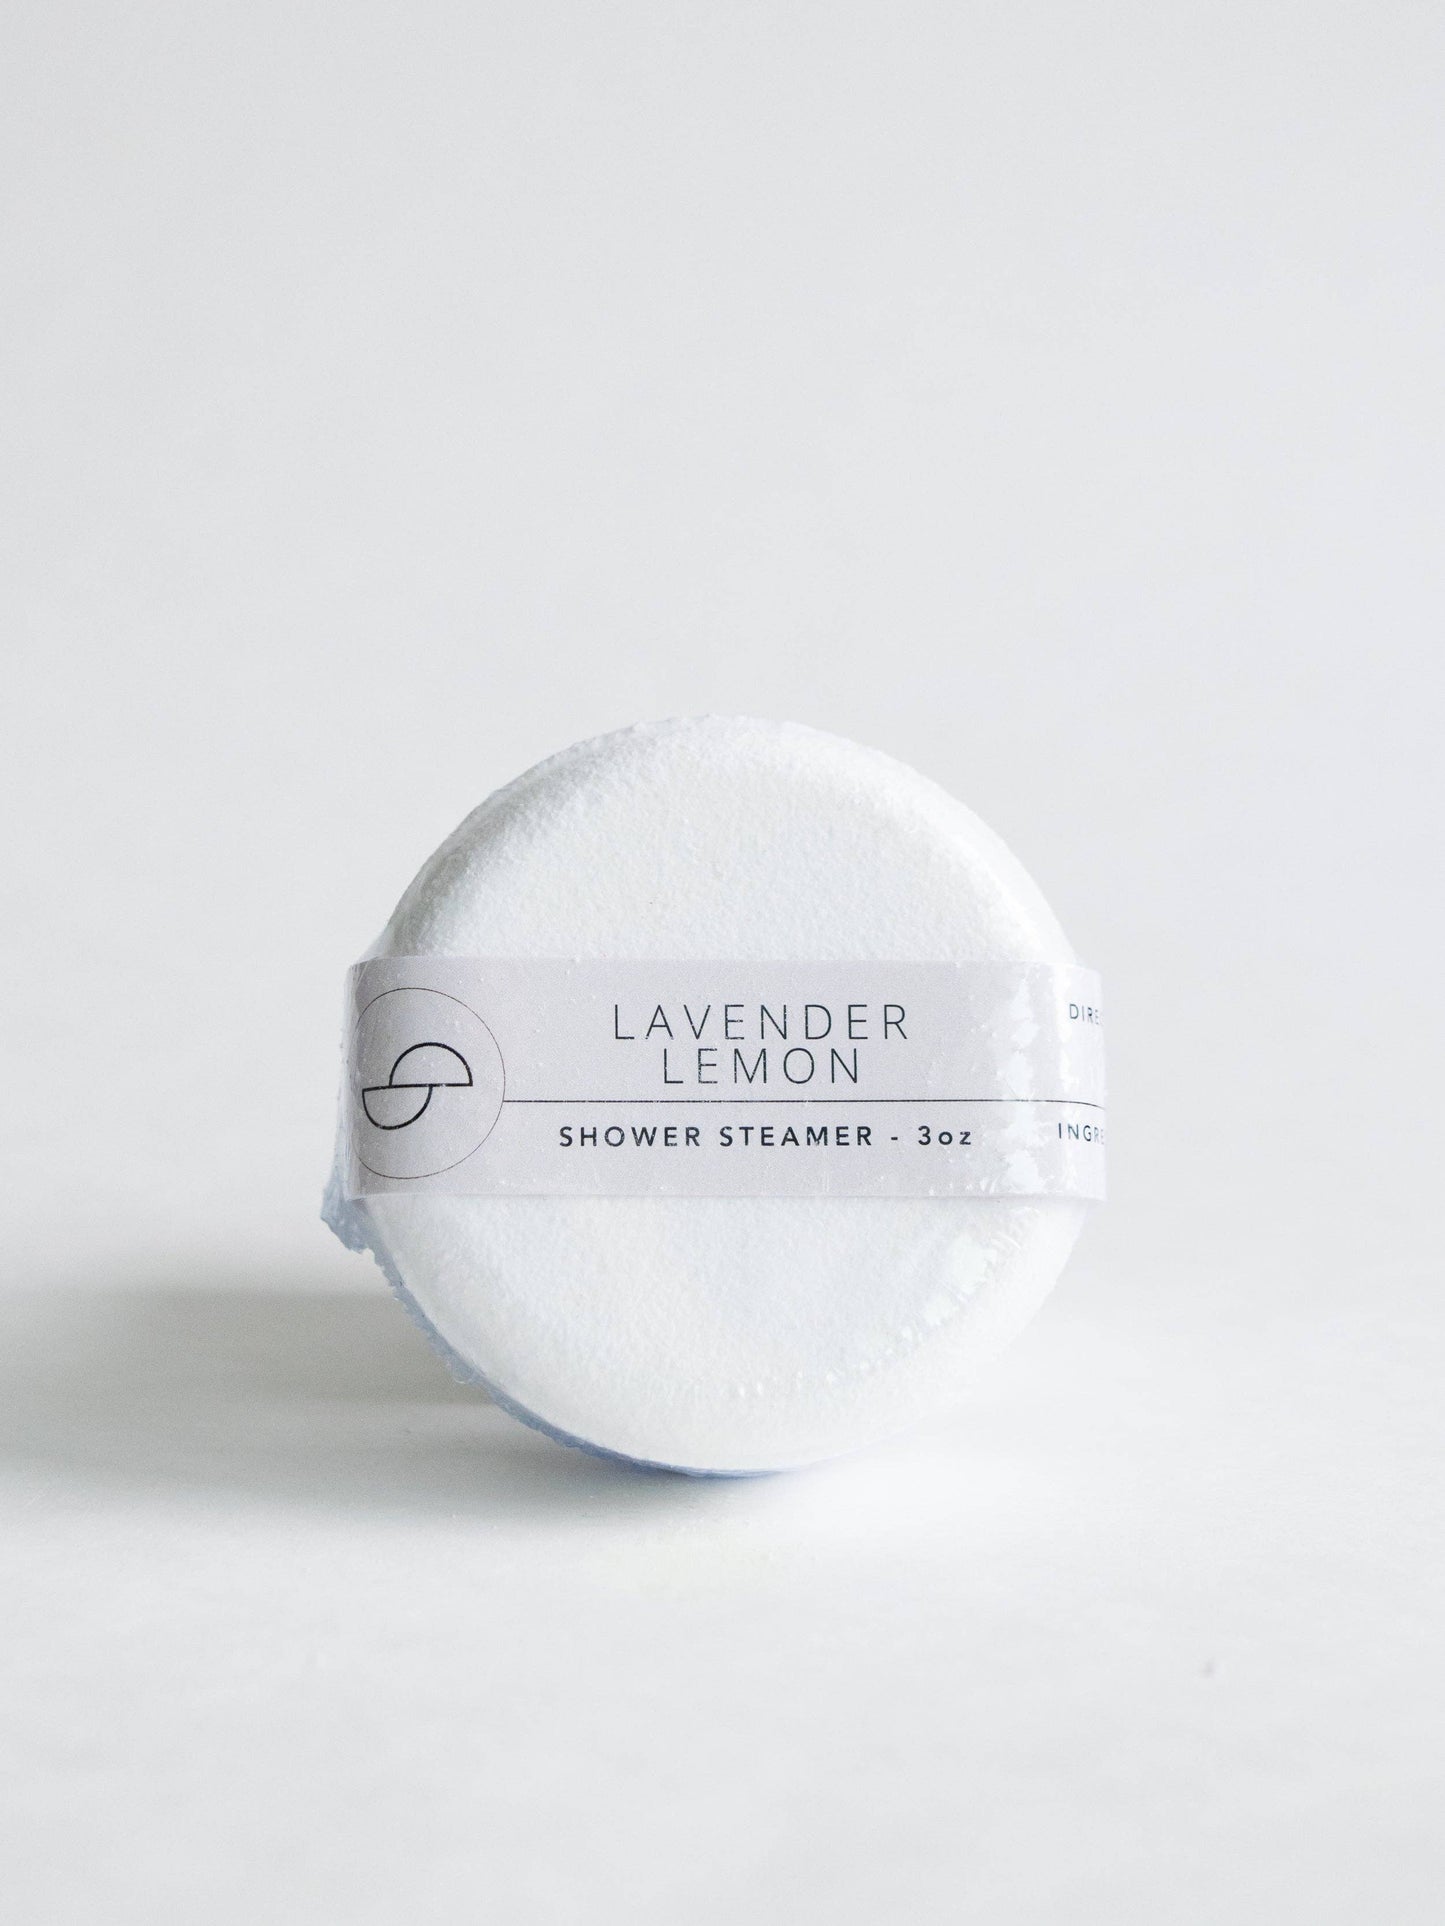 Lend Me Some Sugar Bath Company - Lavender Lemon Shower Steamer